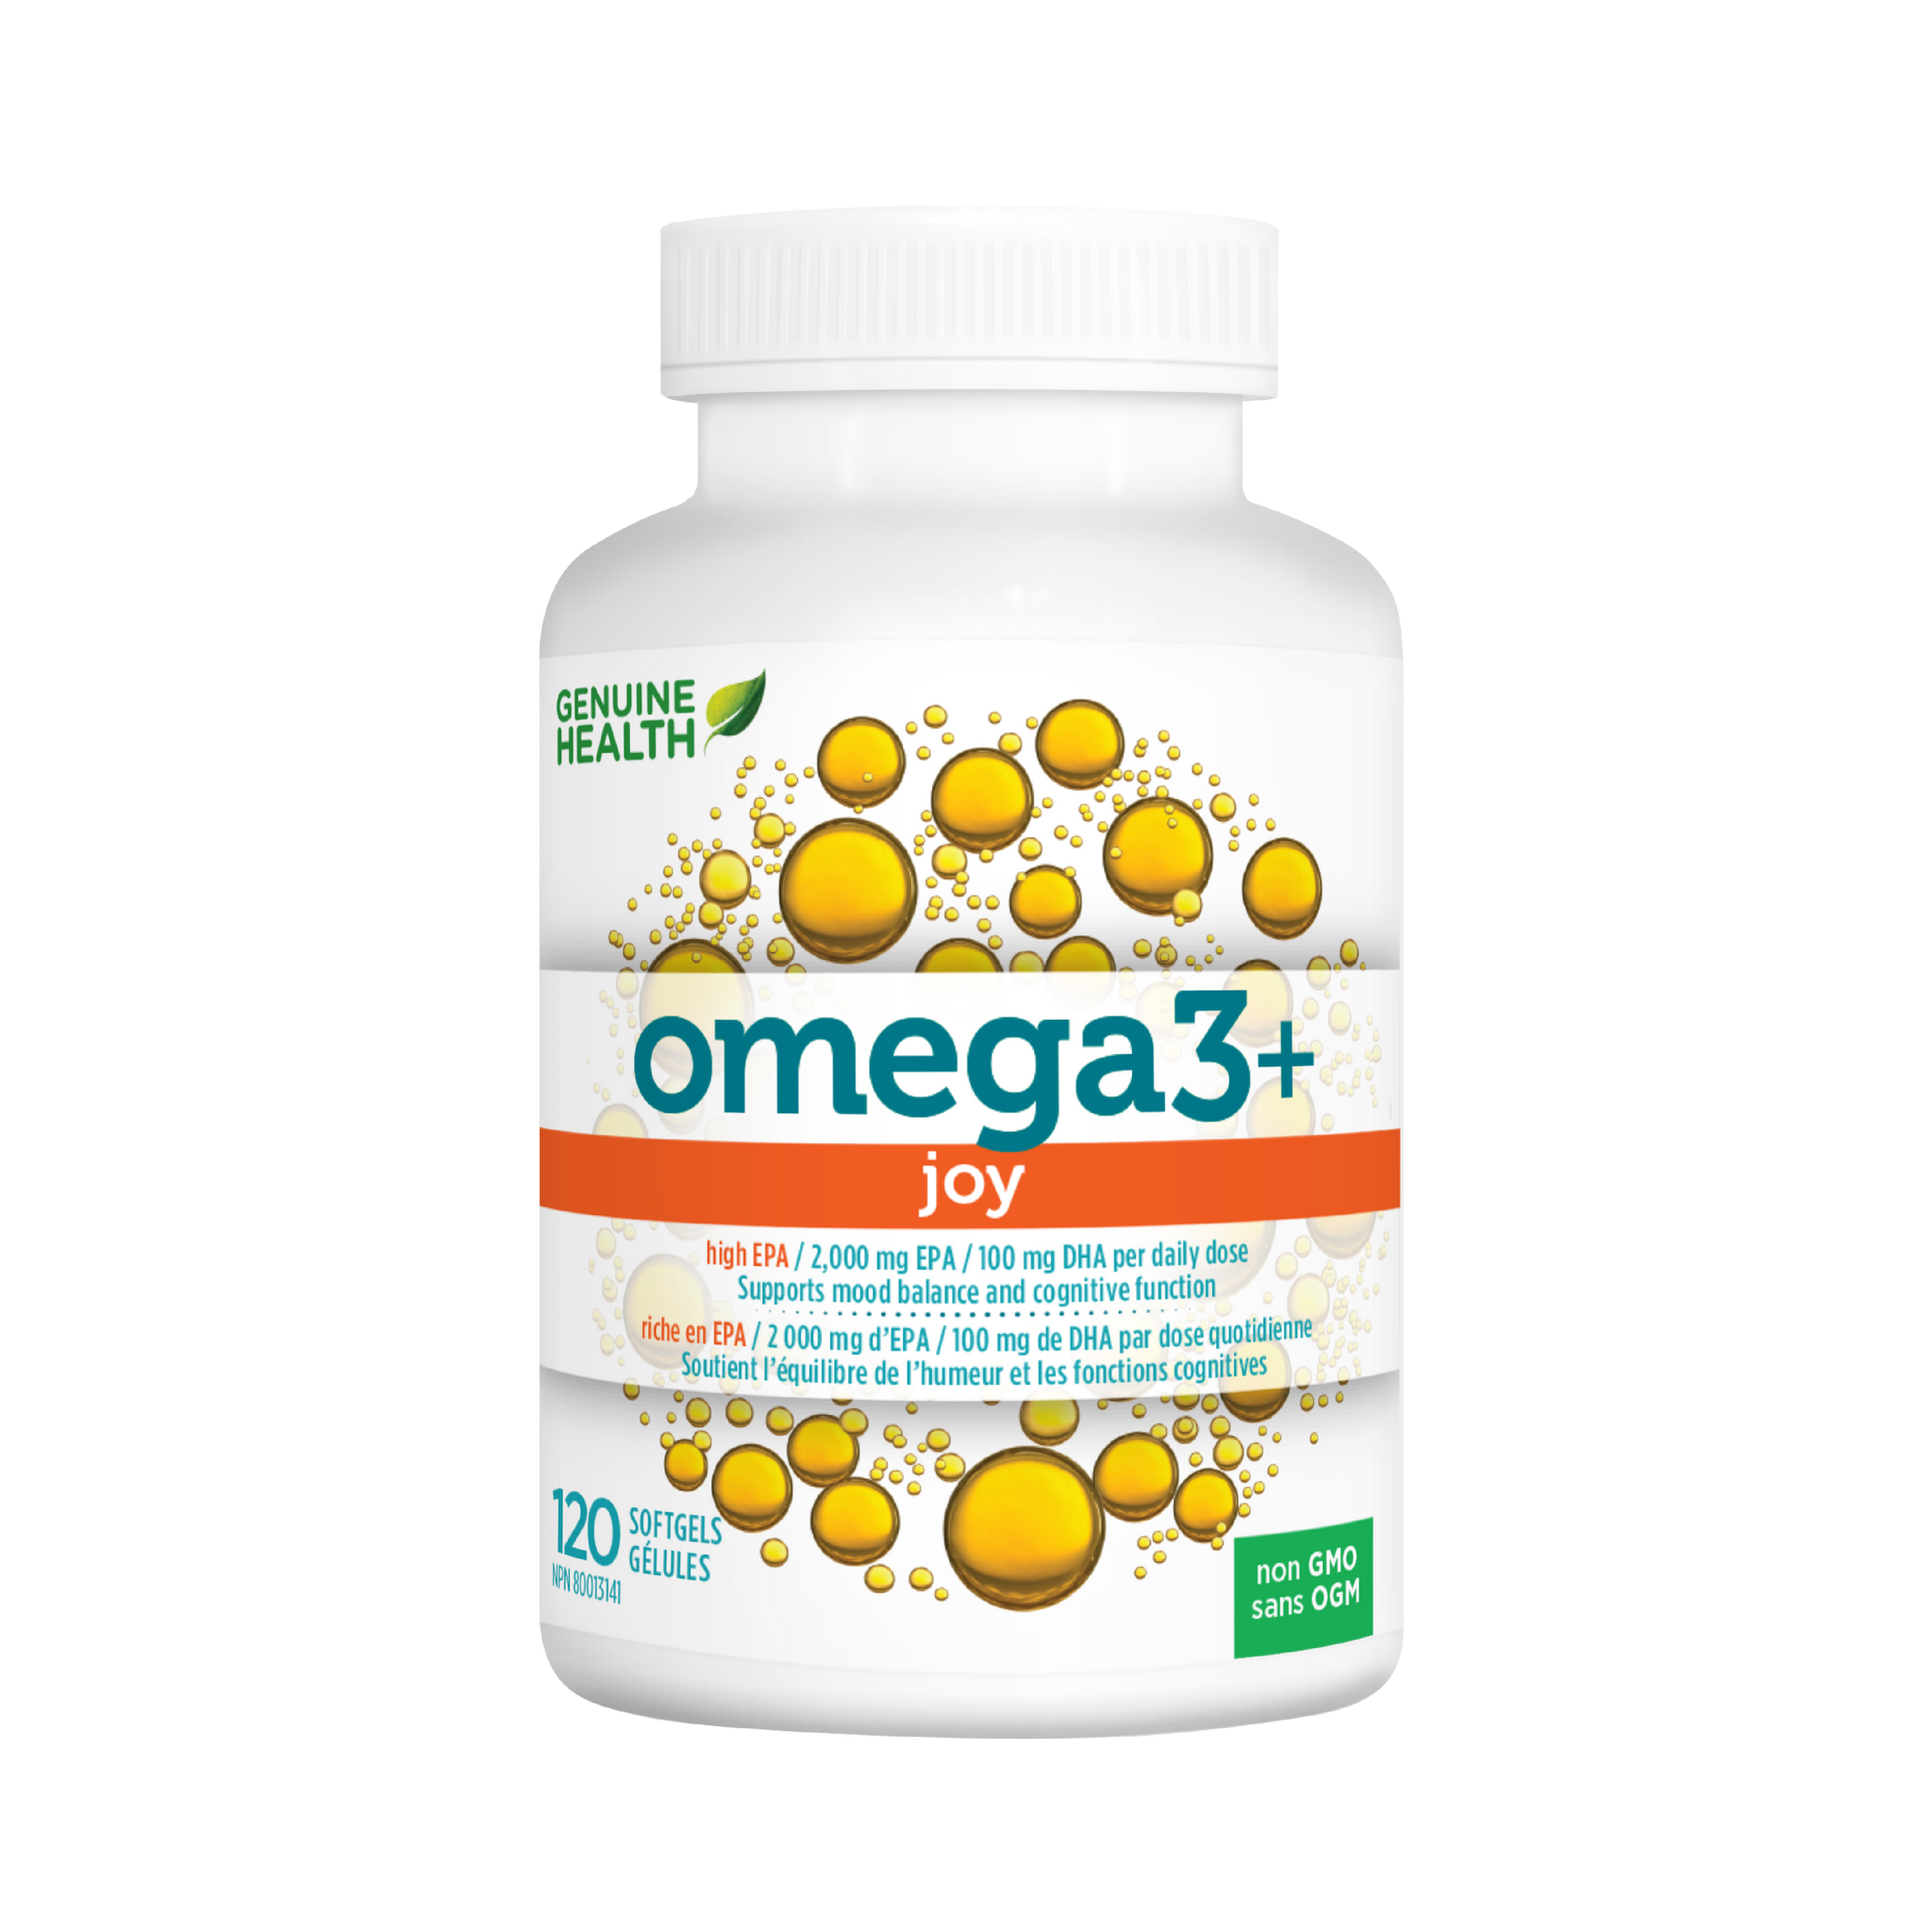 Genuine Health - Omega 3+ Joy - 120 SG